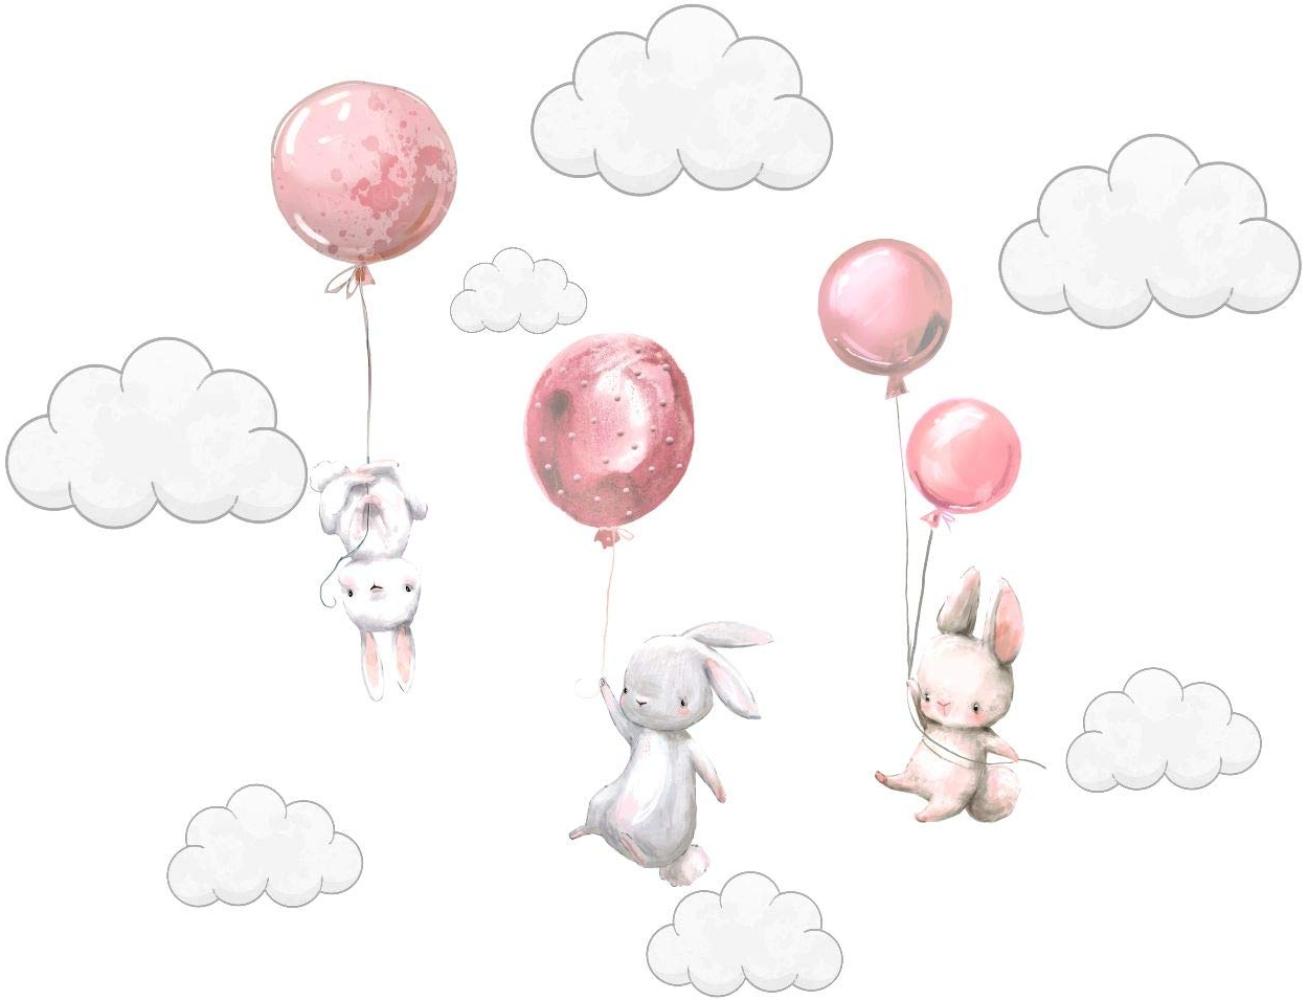 Szeridan Kaninchen Hase Ballons Wolken Wandtattoo Babyzimmer Wandsticker Wandaufkleber Aufkleber Deko für Kinderzimmer Baby Kinder Kinderzimmer Mädchen Junge Dekoration 170 x 200 cm (XXXXL, Rosa) Bild 1